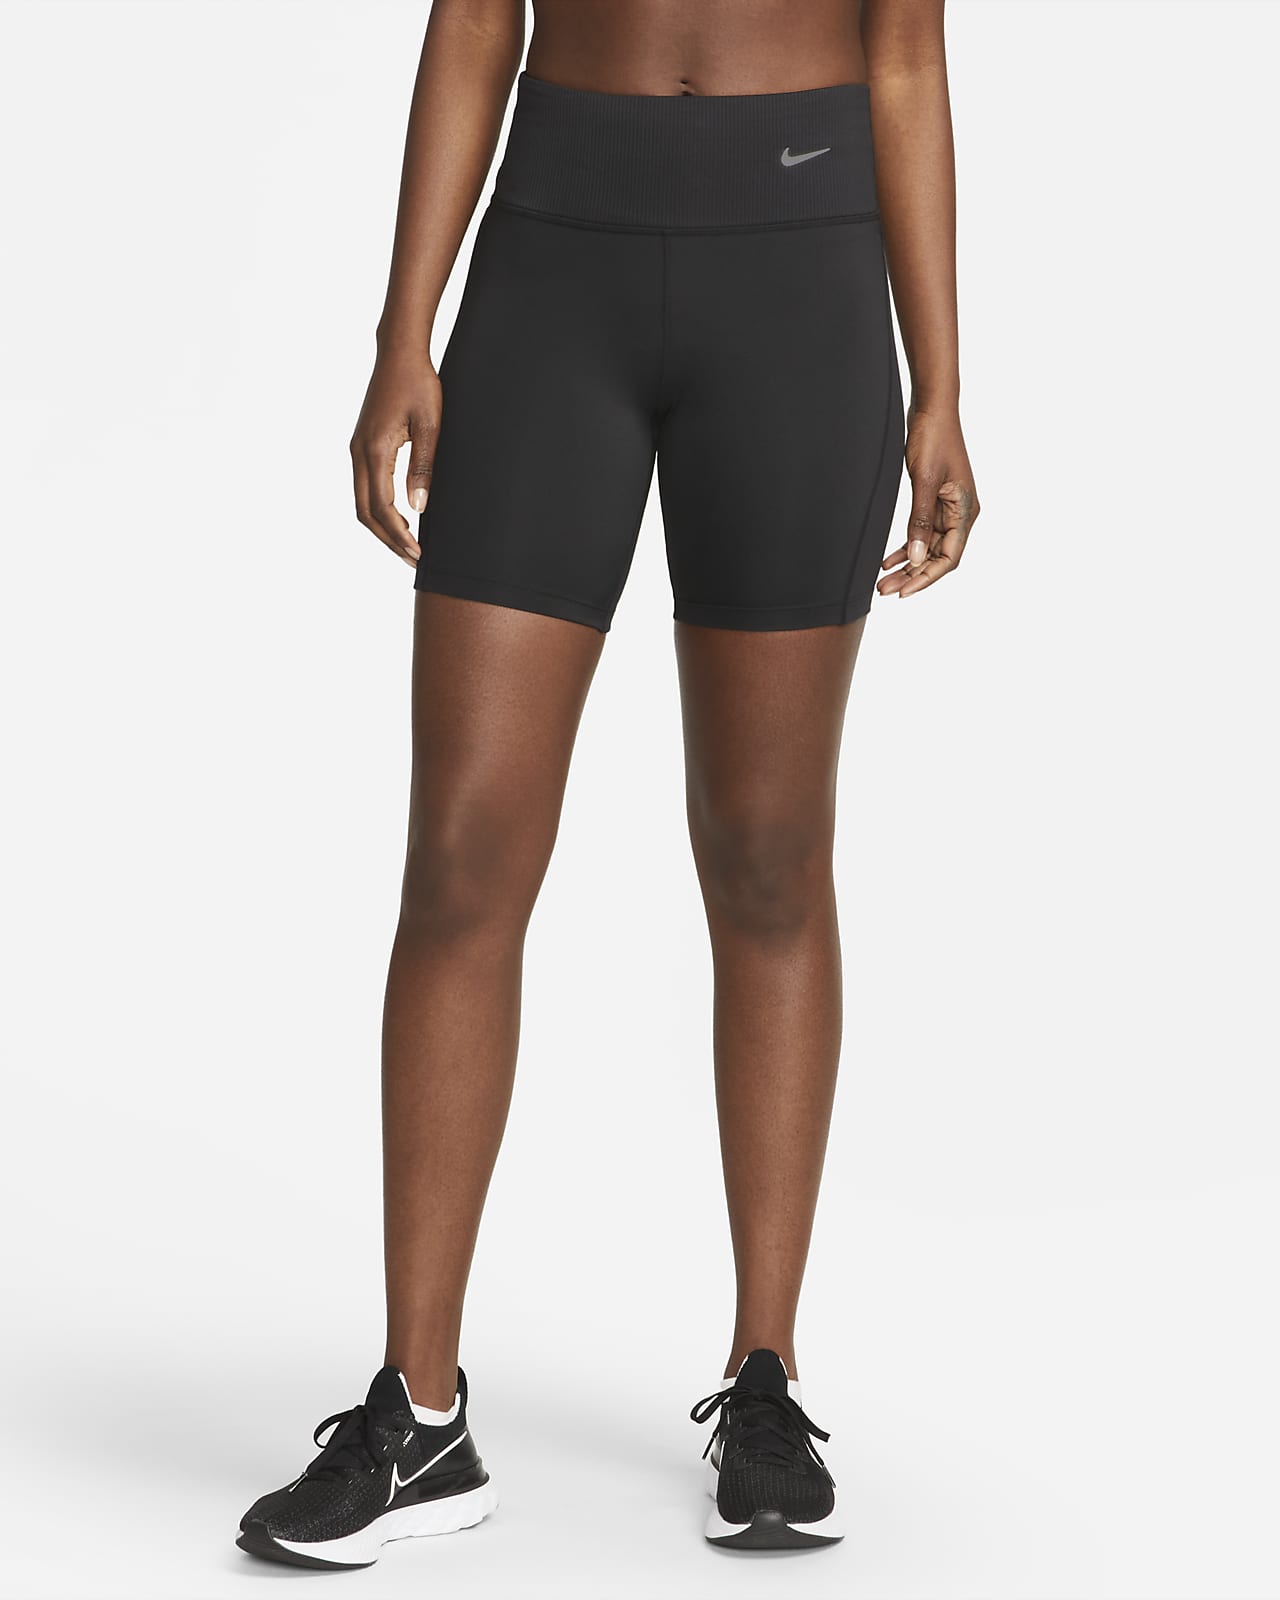 Nike Mid-Rise Running Shorts Pockets. Nike .com